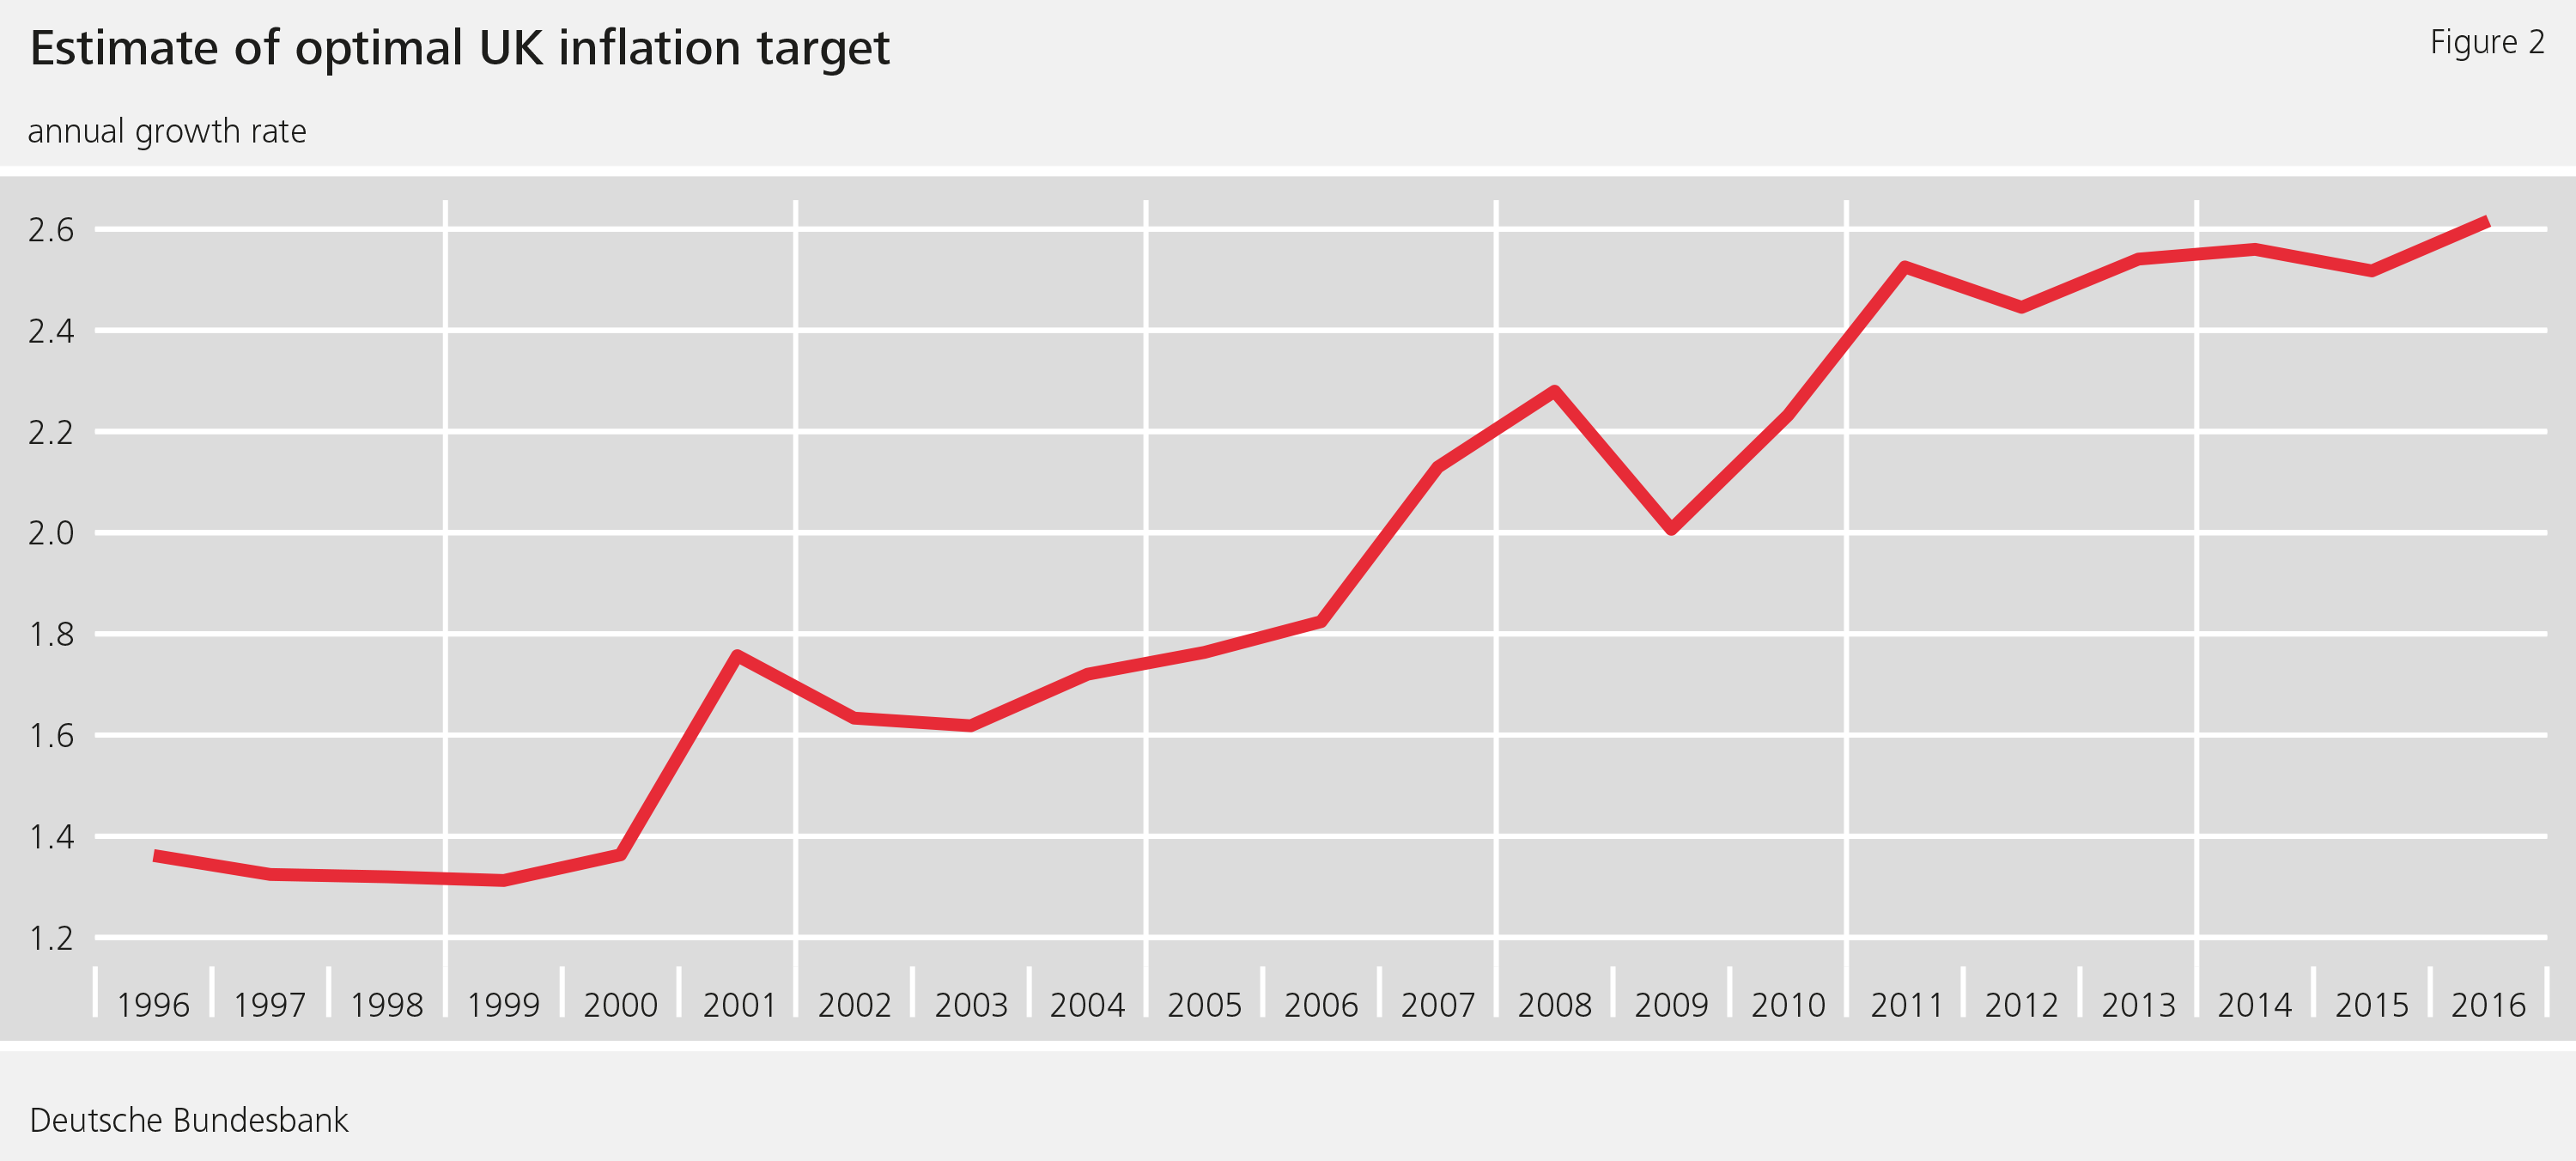 Figure 2: Estimate of optimal UK inflation target